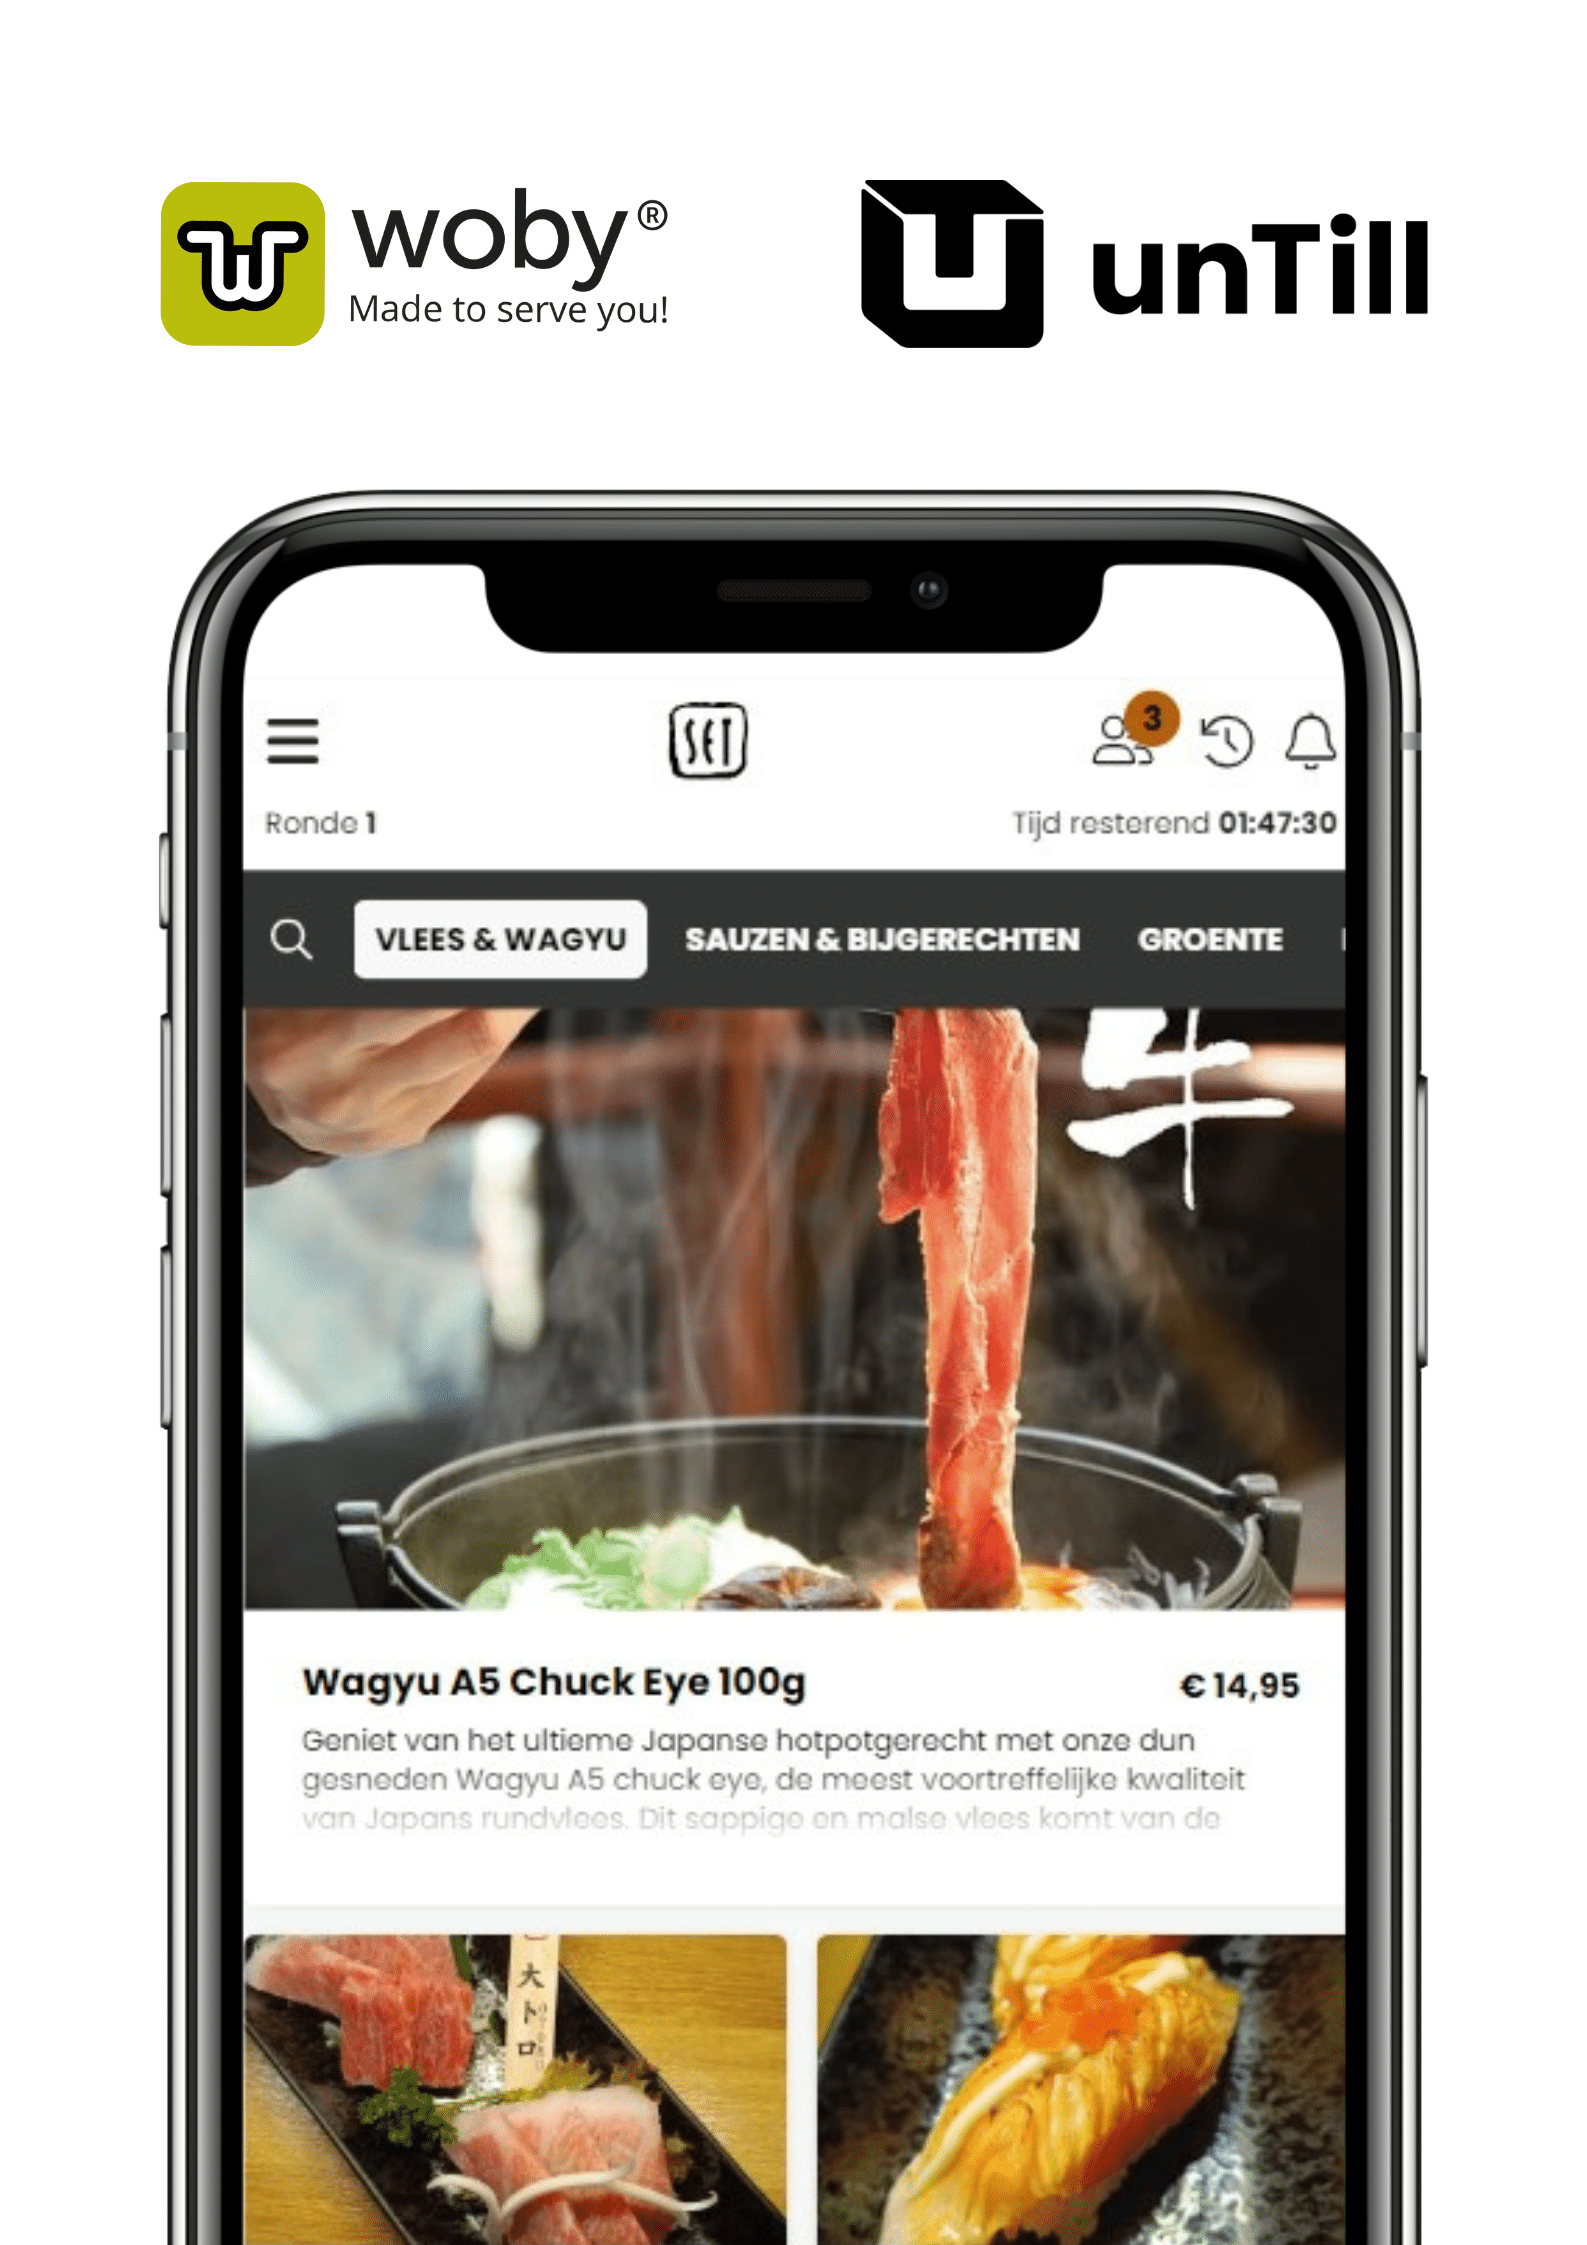 Iphone frame met woby app en logo van untill en woby